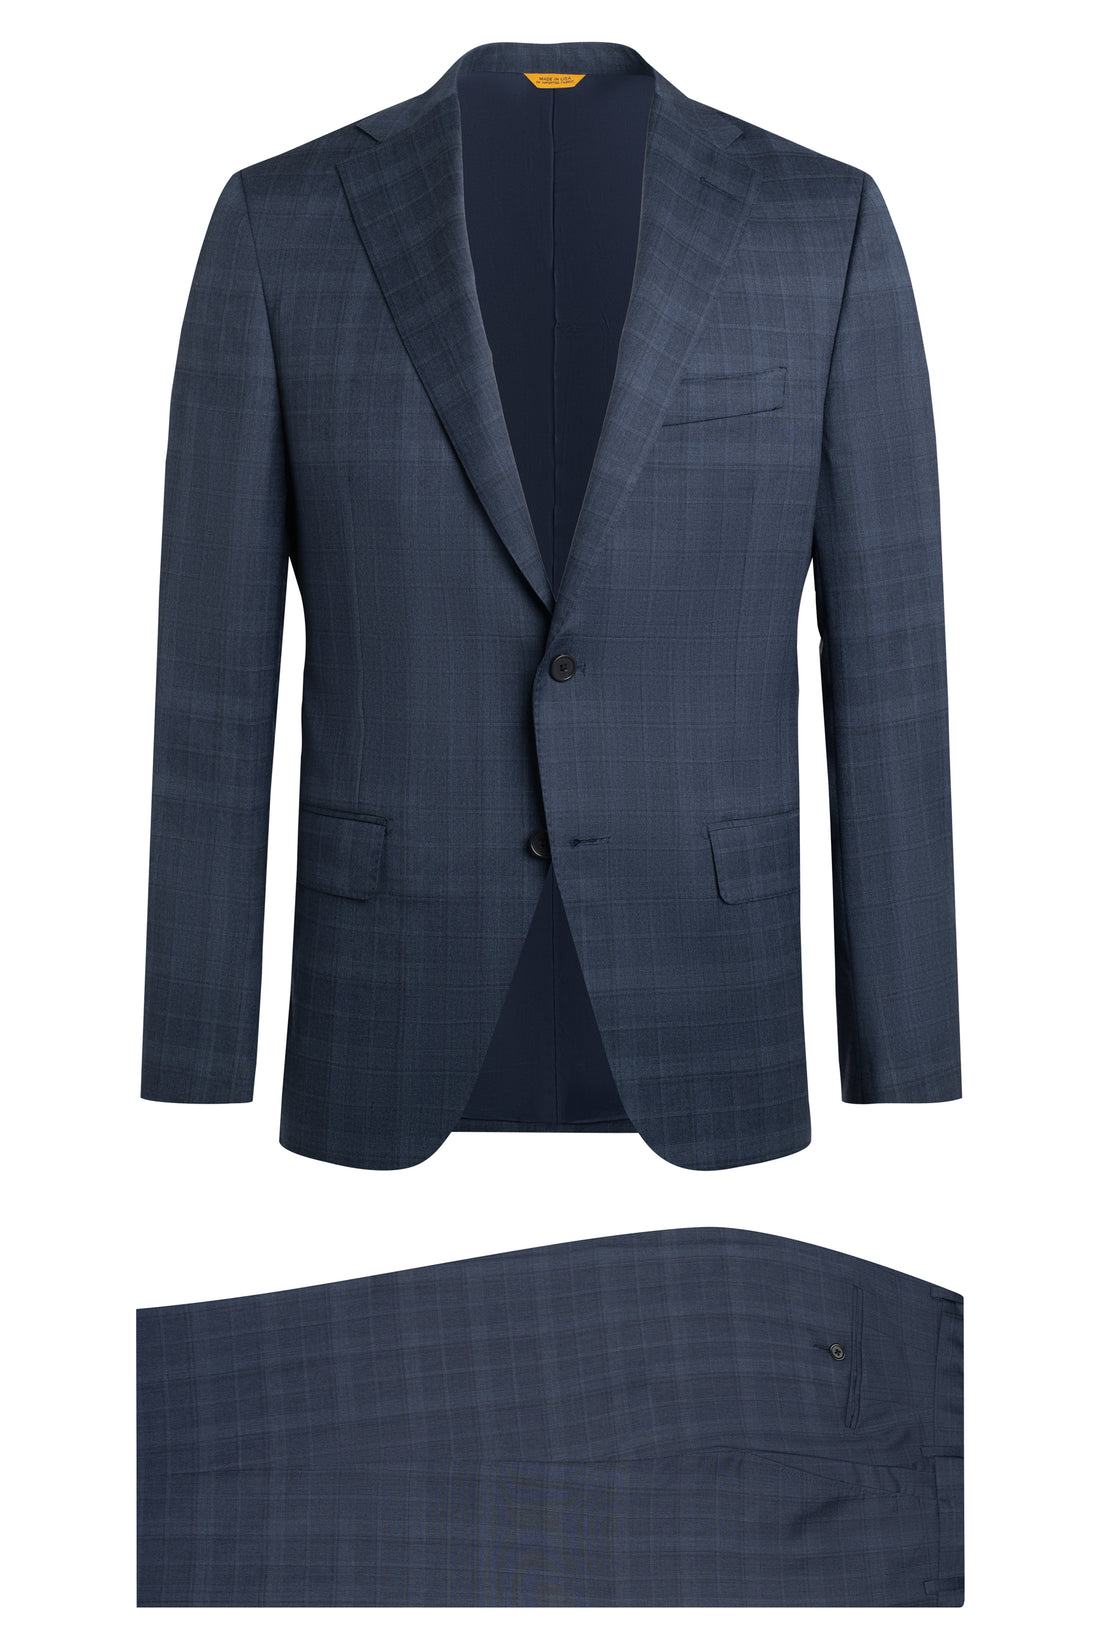 Slate Blue Plaid Suit 